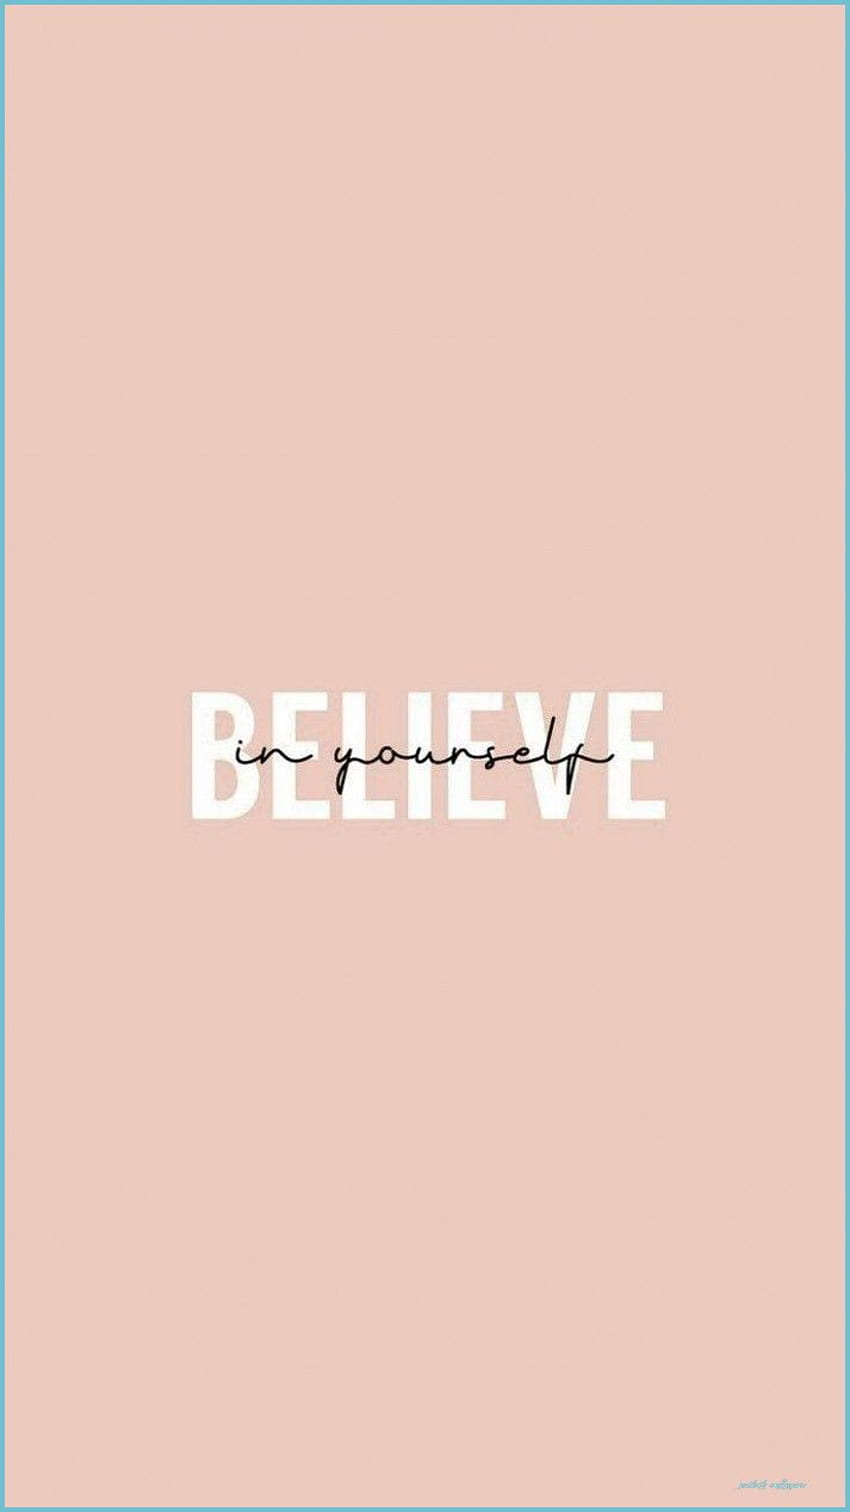 Believe in yourself phone wallpaper - Positivity